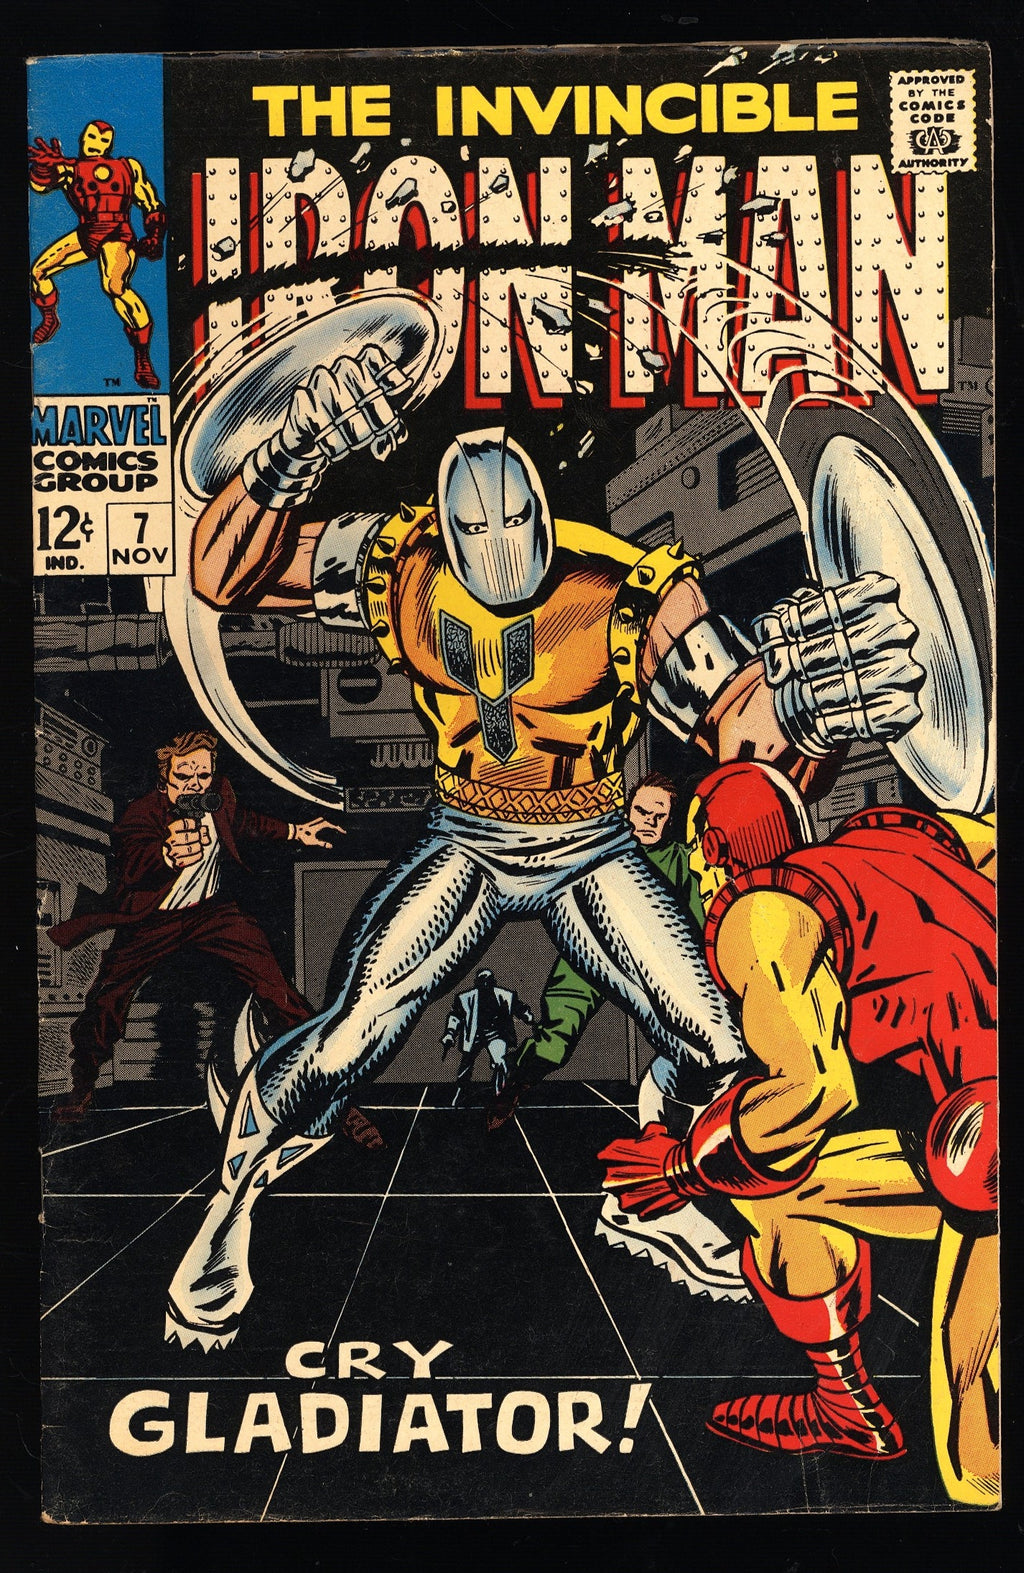 1968 The Invincible Iron Man 7 FN